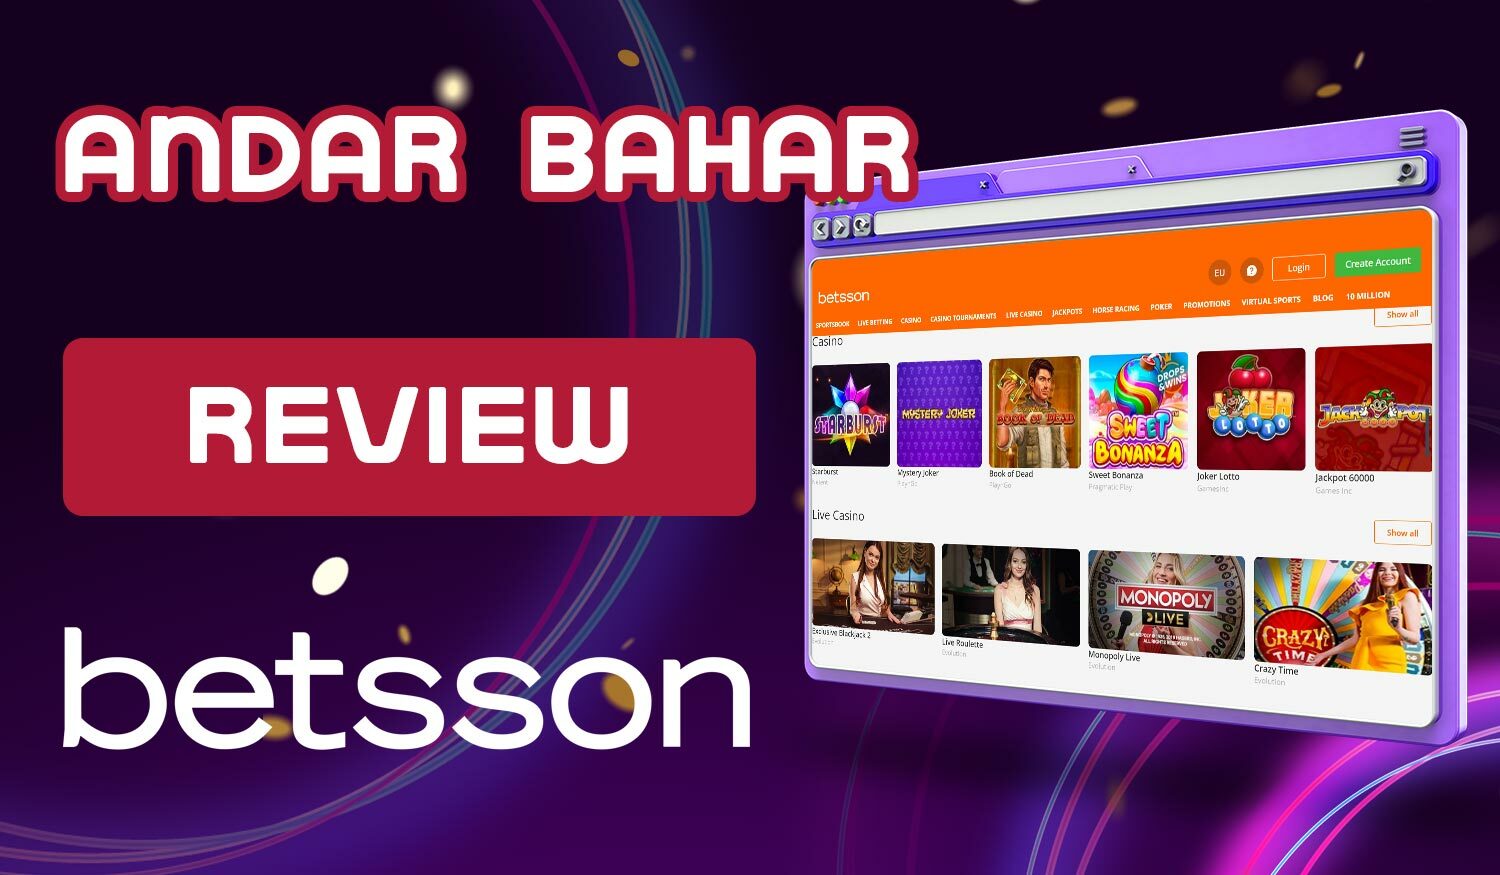 Detailed description of the online casino Betsson on Andar Bahars